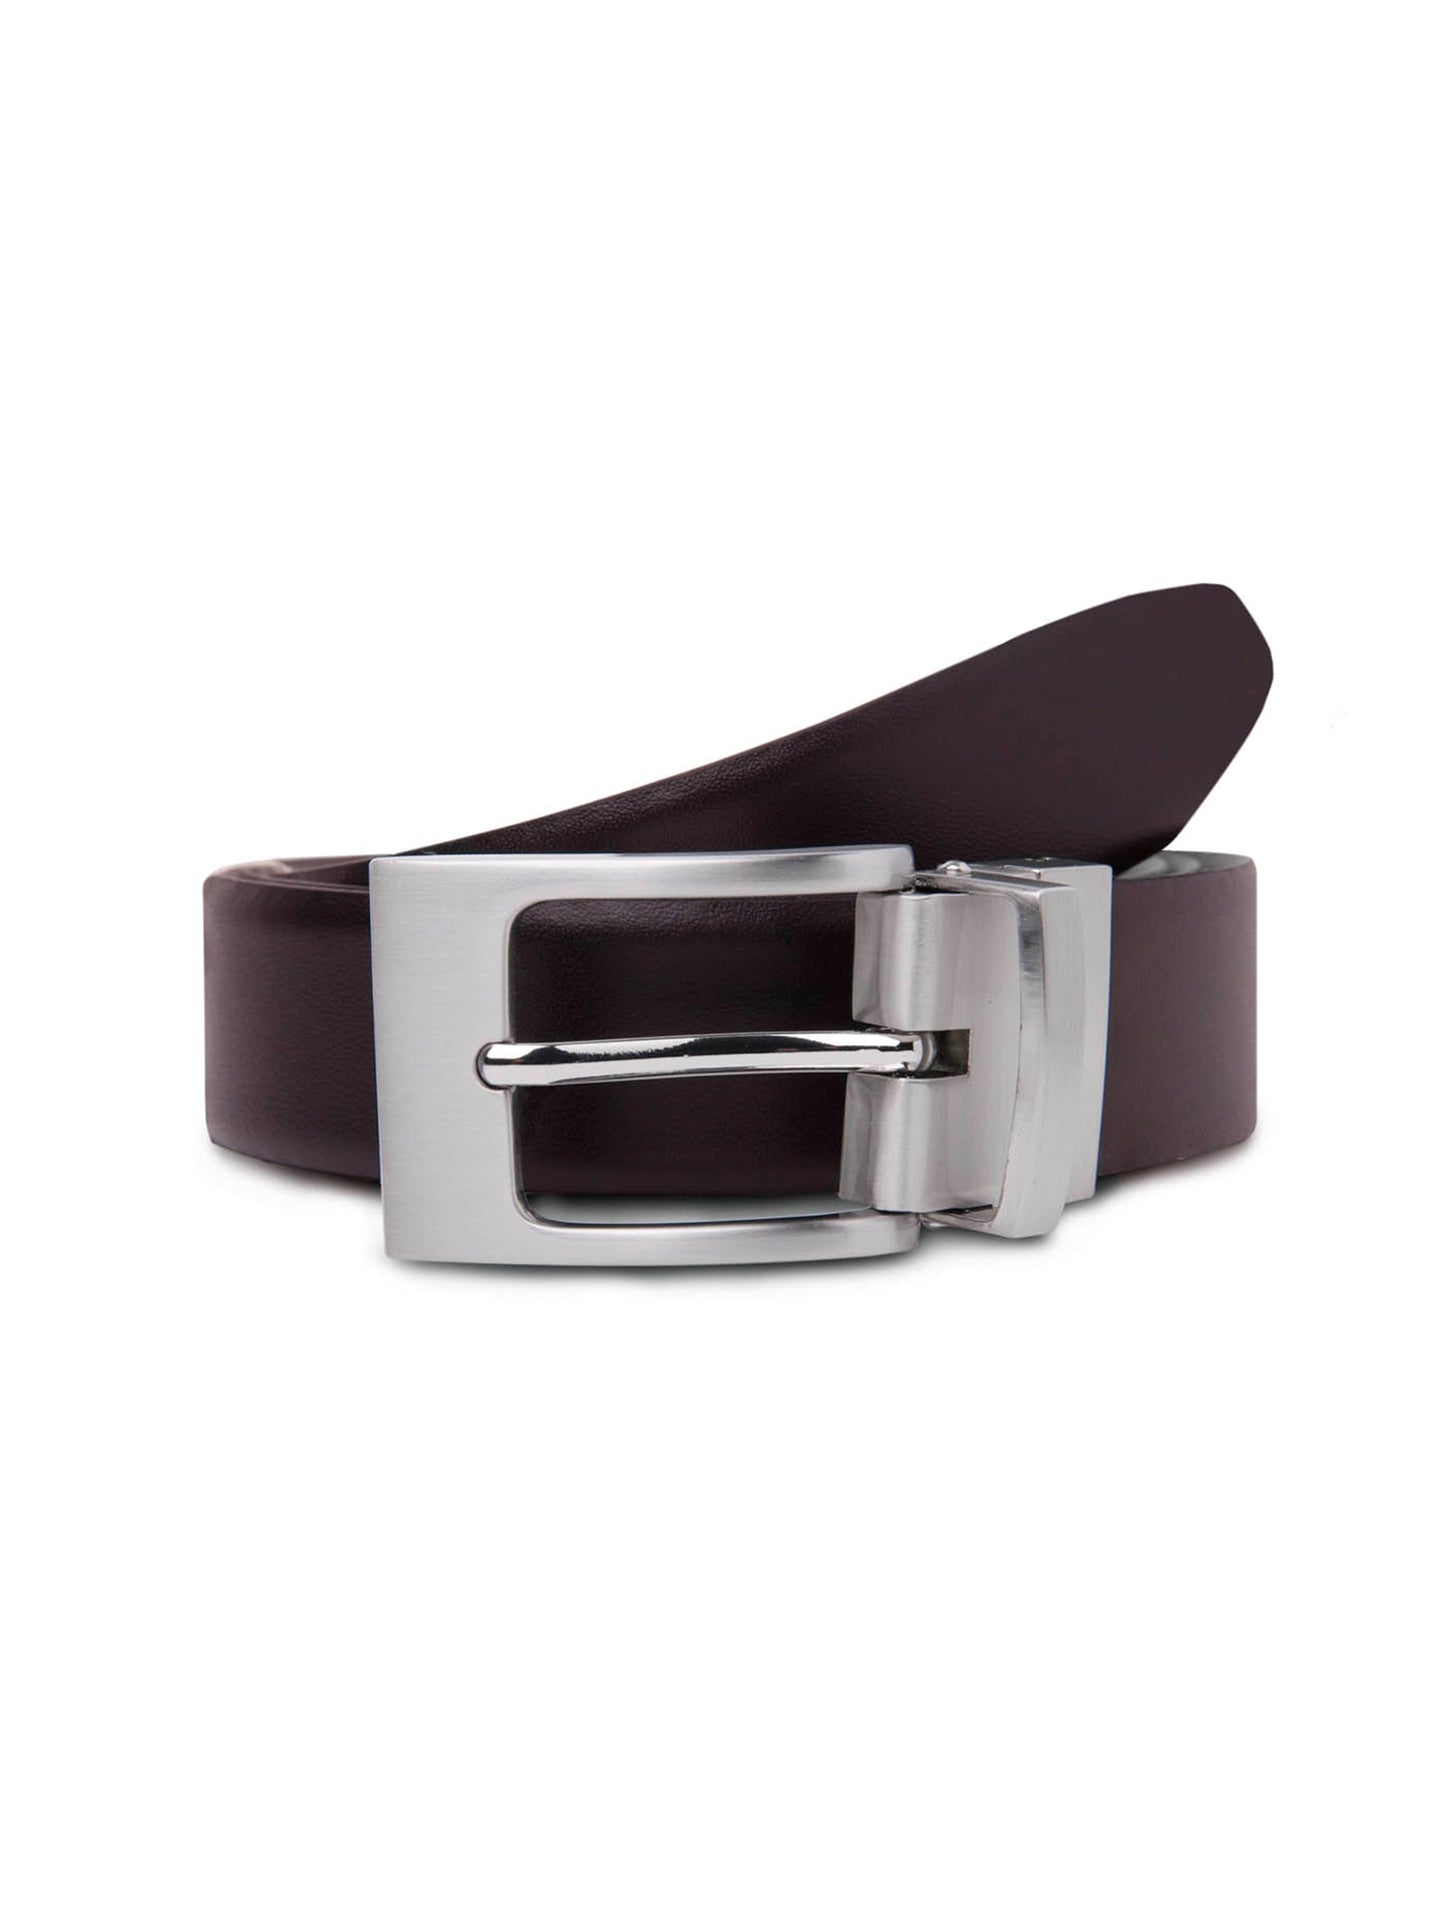 Black & Brown Leather Reversible Belt